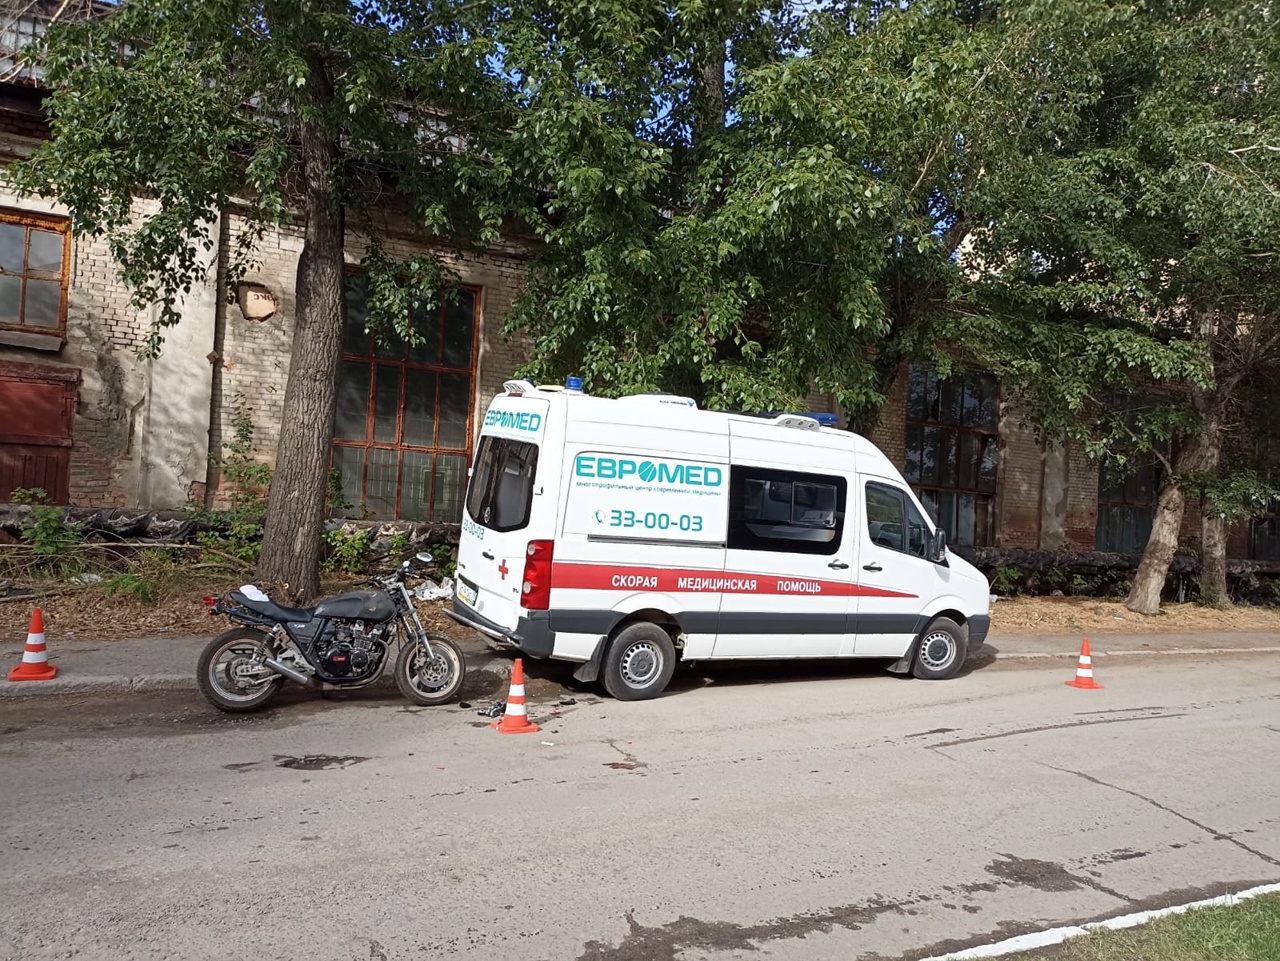 В Омске мотоциклист протаранил скорую «Евромеда» #Новости #Общество #Омск